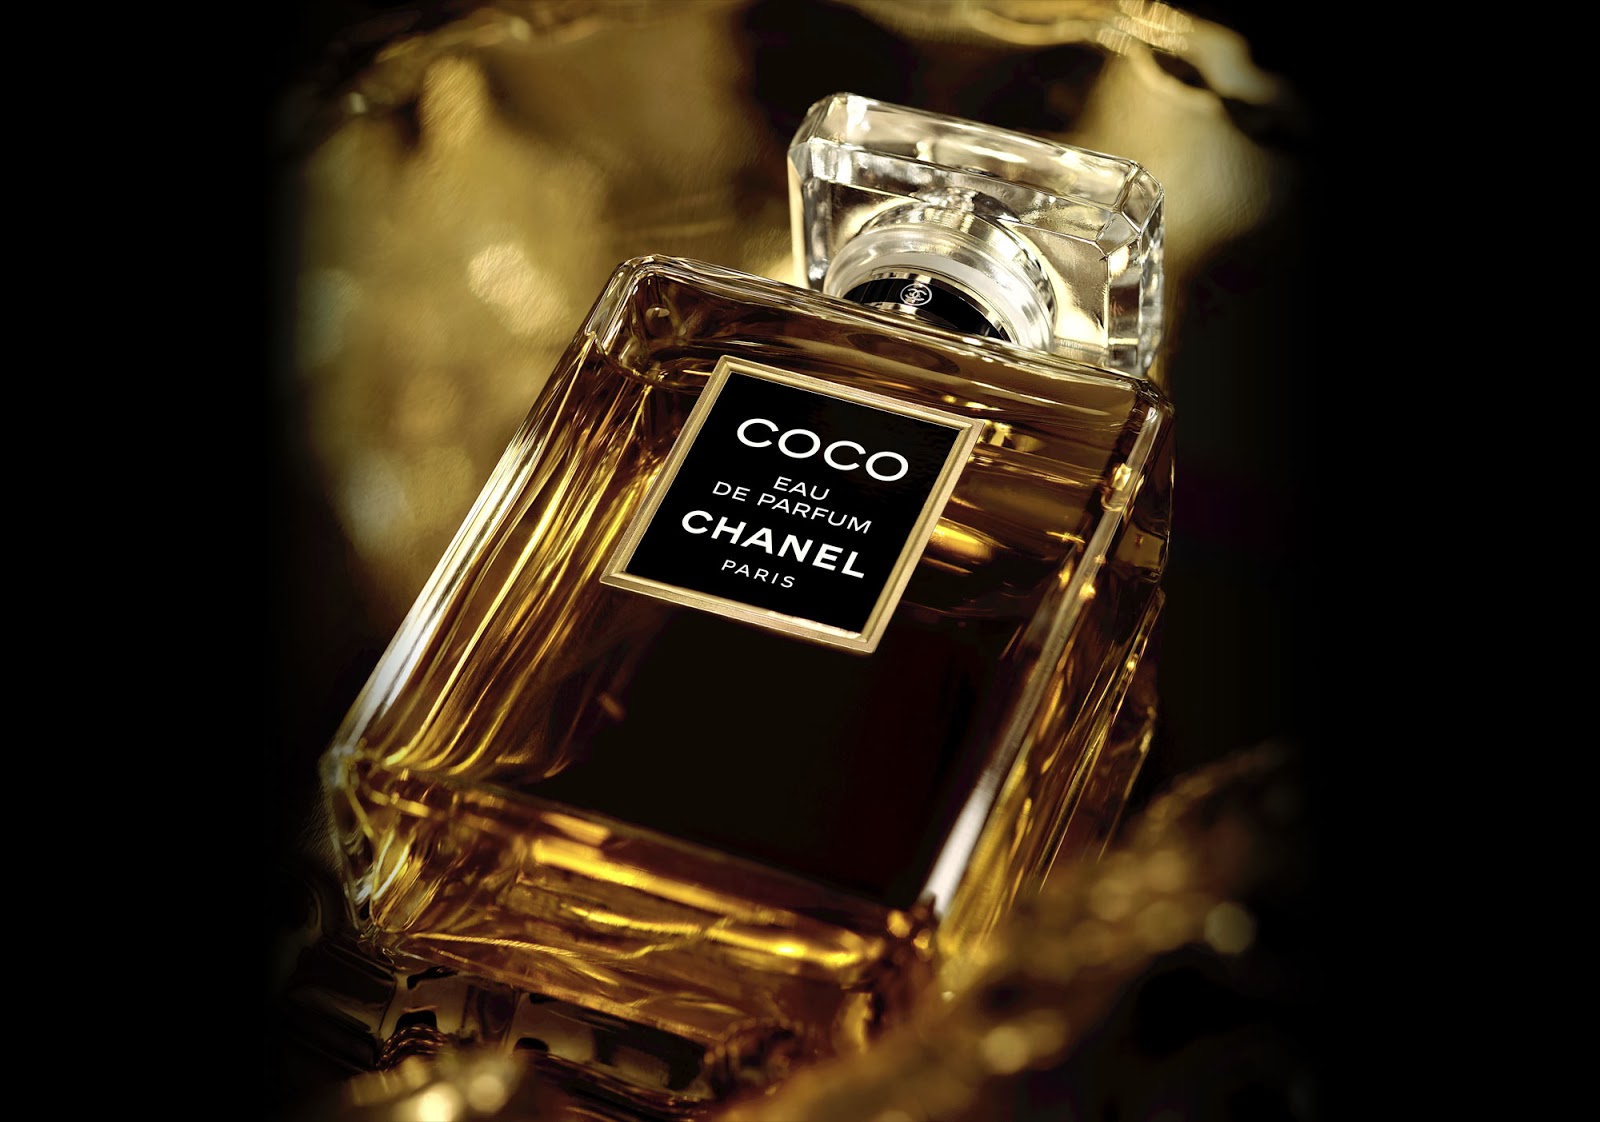 coco chanel perfume sets